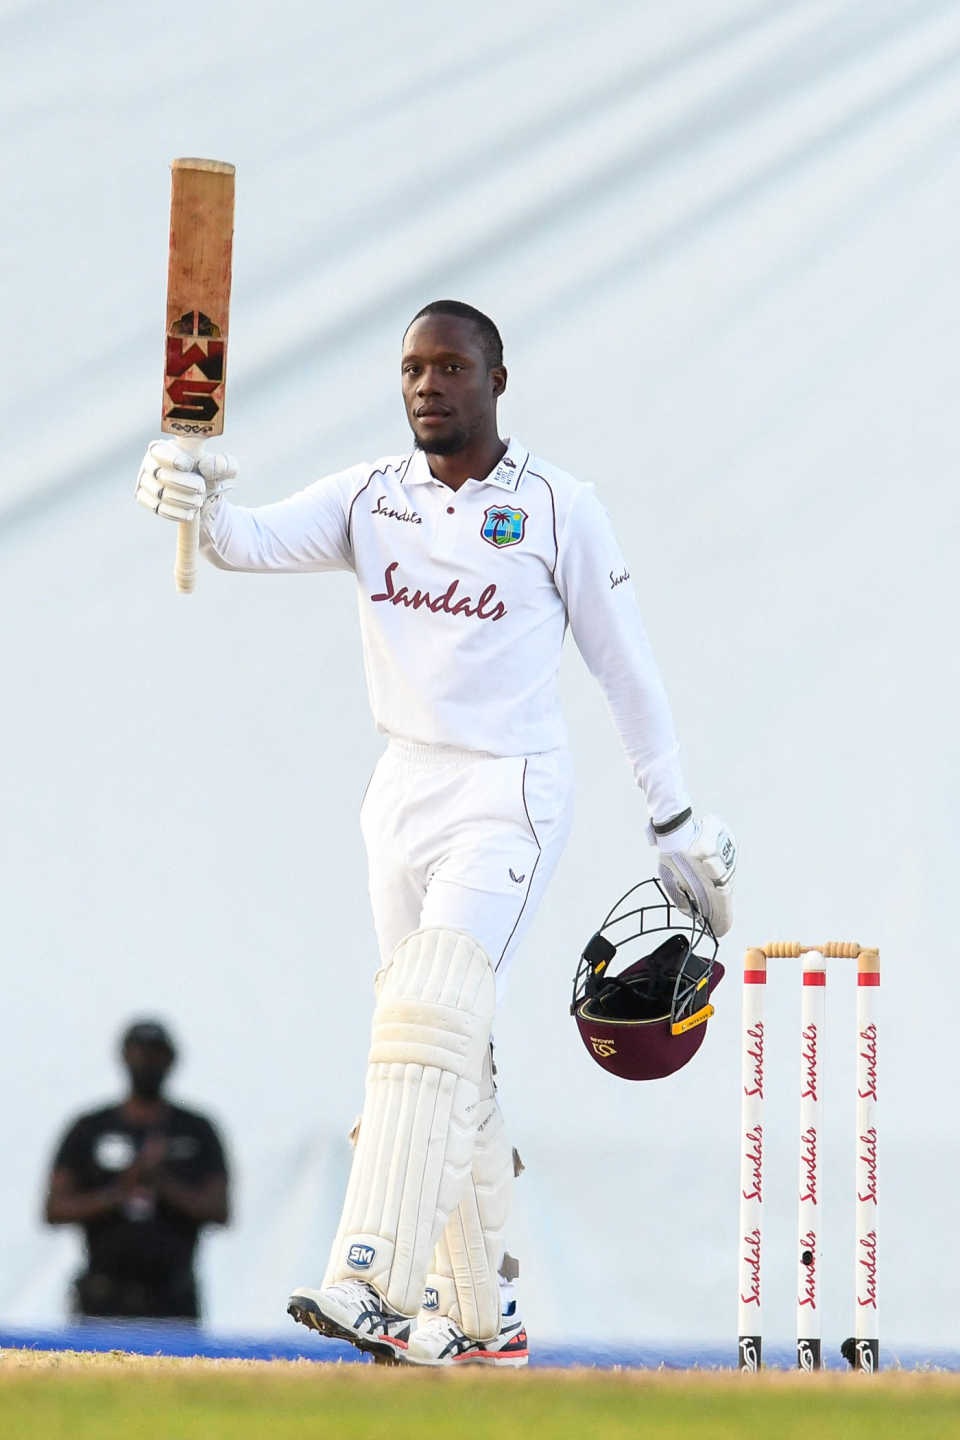 Nkrumah Bonner raises his bat after reaching his maiden Test century